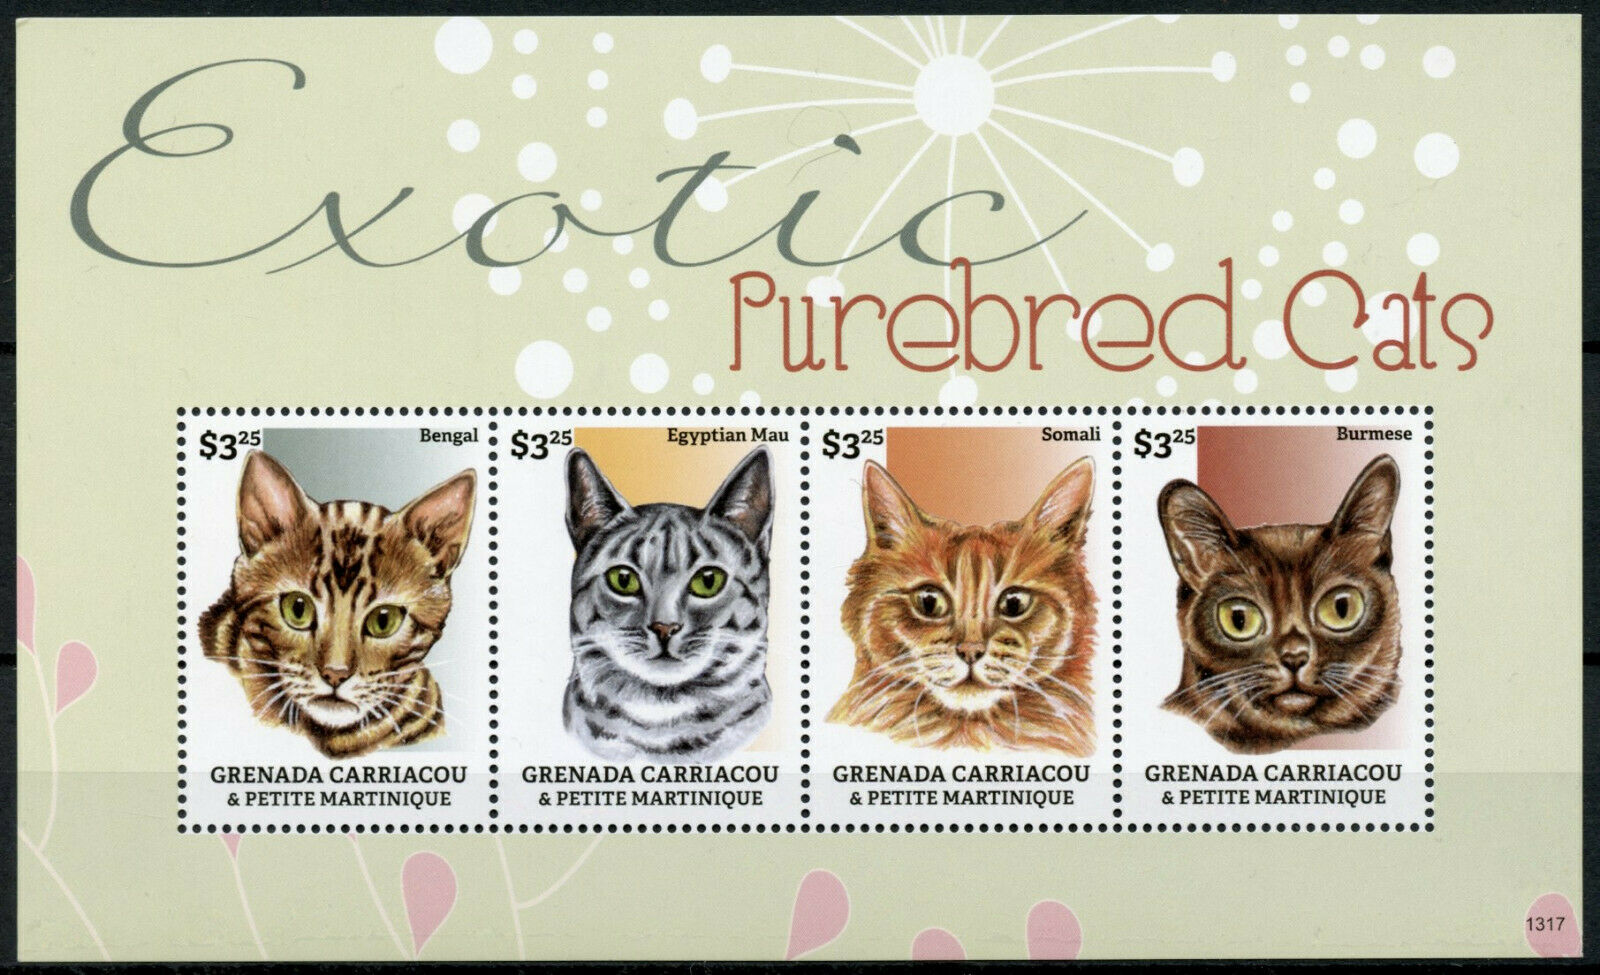 Grenadines Grenada 2013 MNH Exotic Purebred Cats Stamps Bengal Burmese 4v M/S I